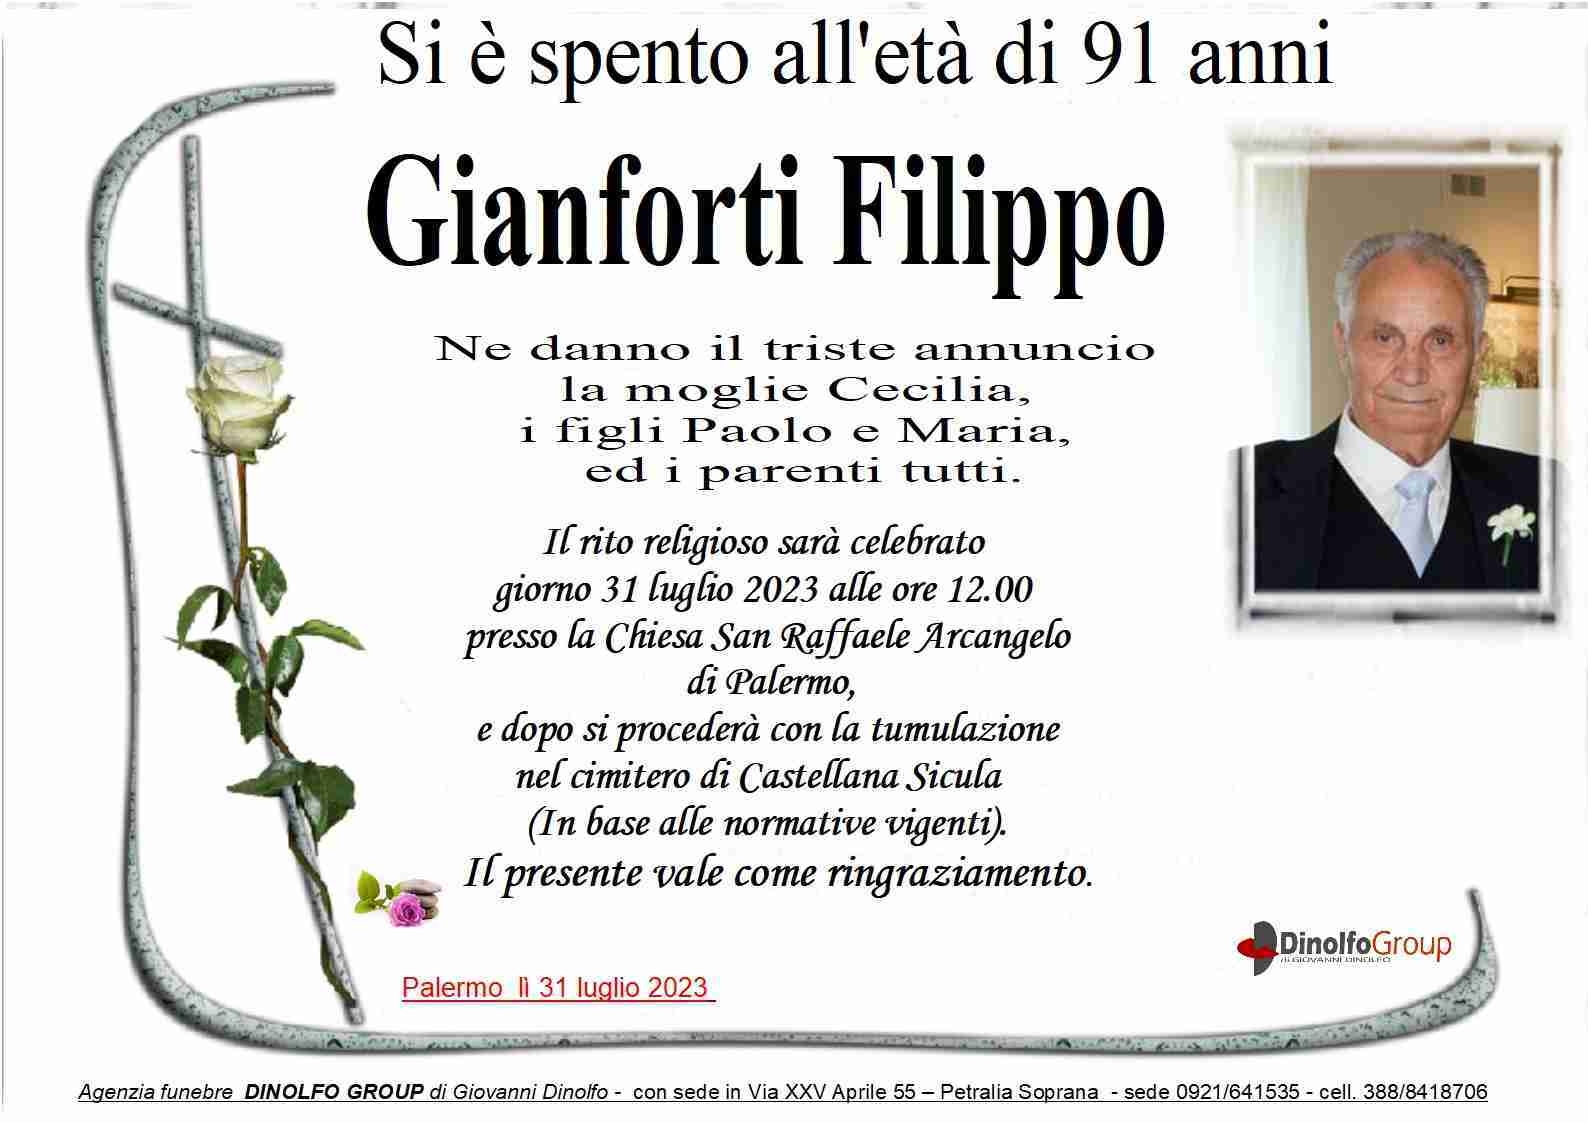 Filippo Gianforti